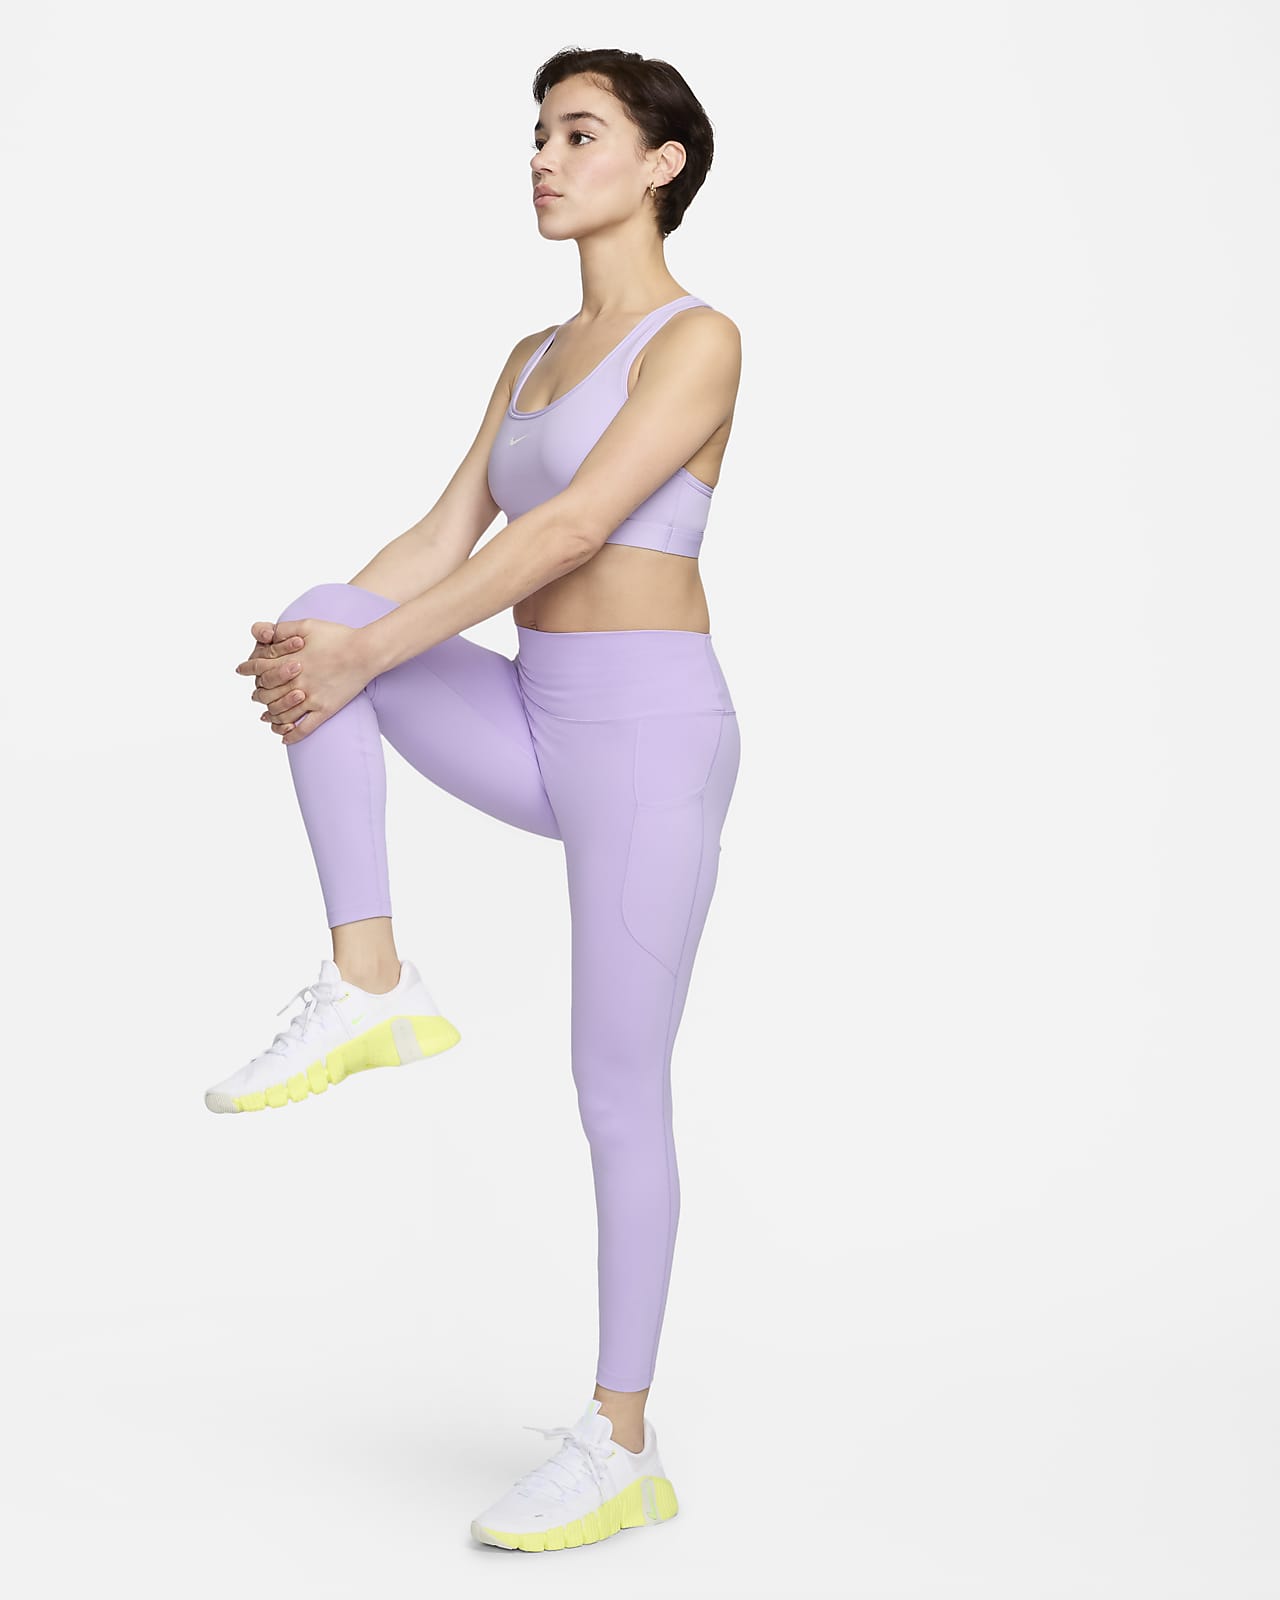 Nike Dri-FIT Swoosh Women's Medium-Support Non-Padded Sports Bra 'Whit –  Bouncewear